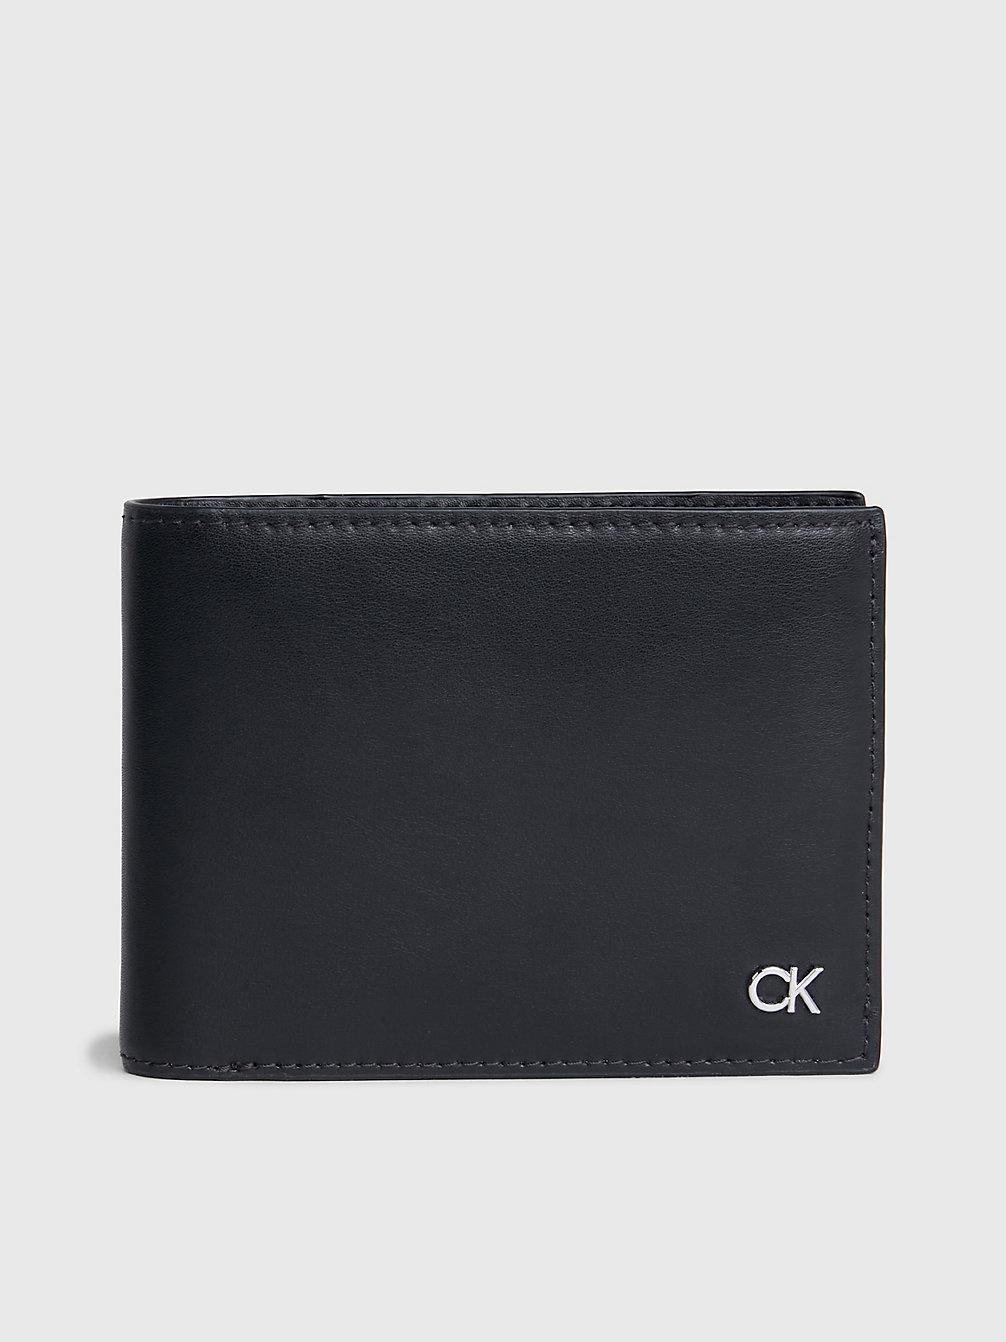 CK BLACK Leather Rfid Trifold Wallet undefined Men Calvin Klein